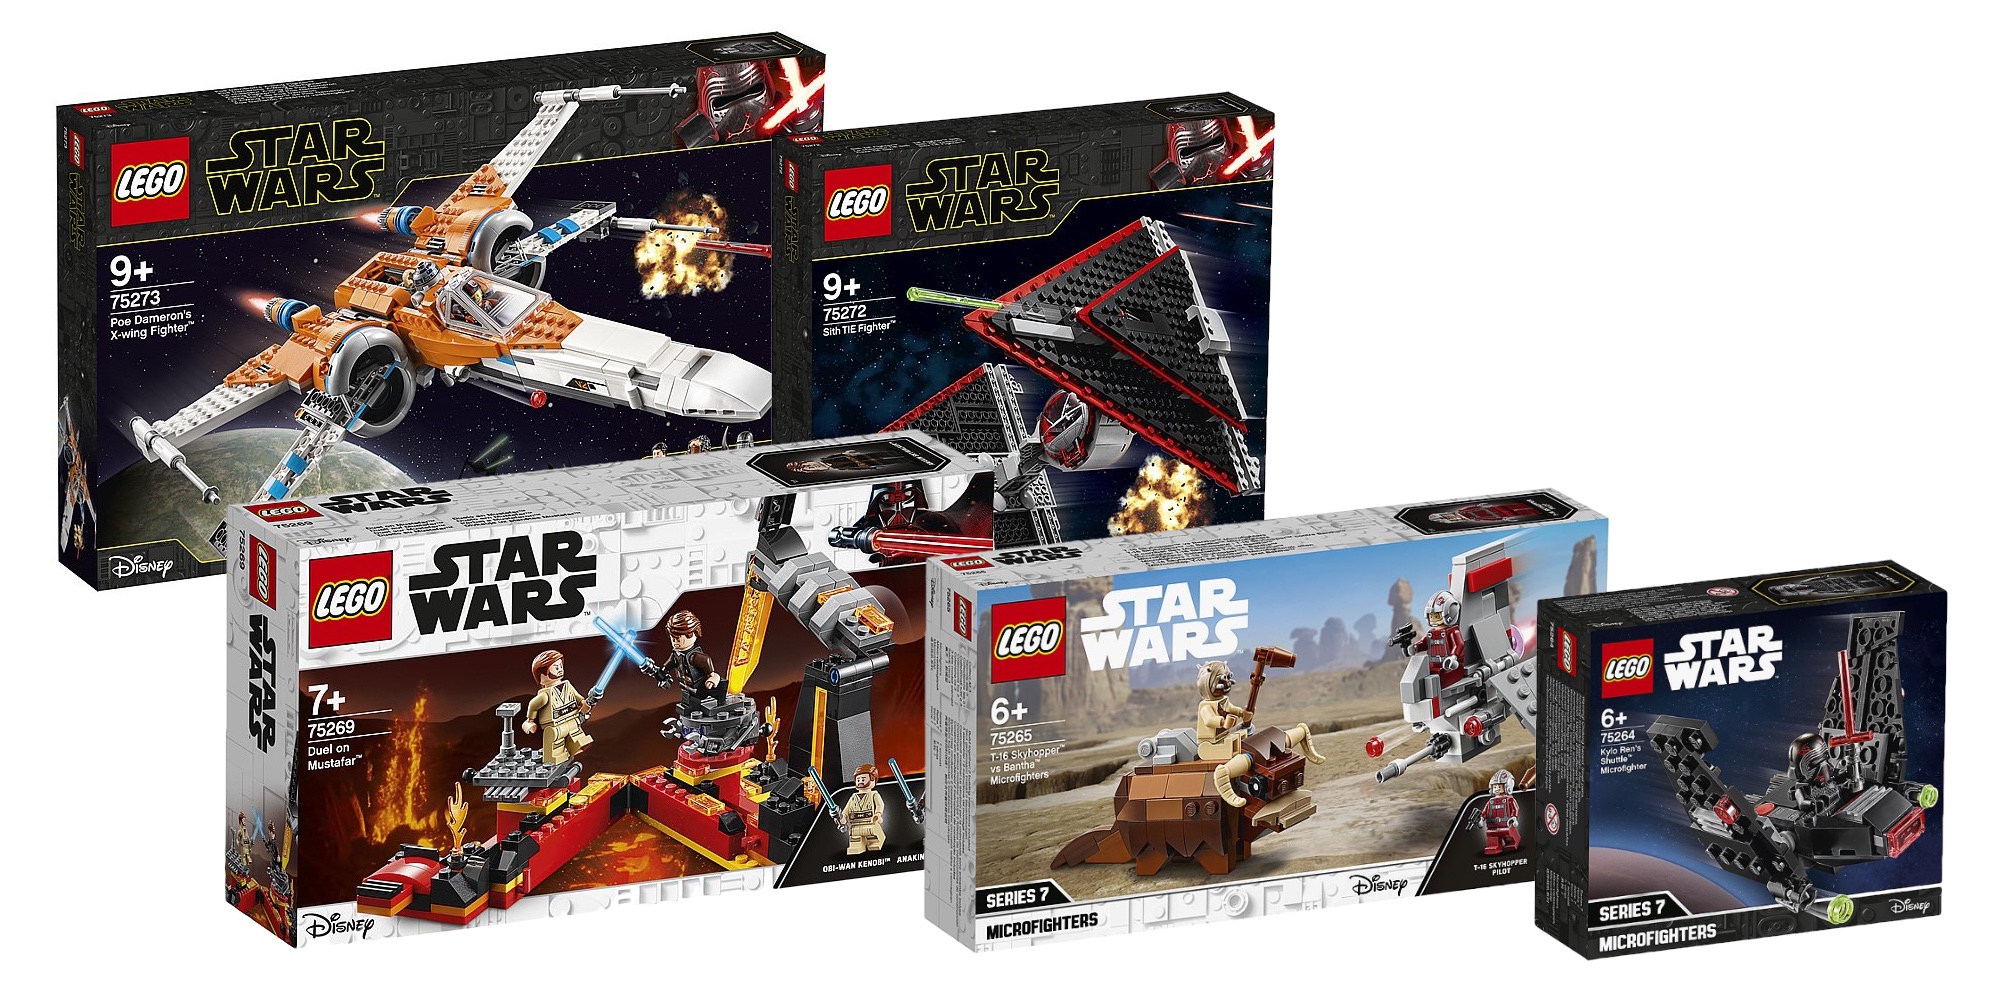 Evolve Stranden Erasure LEGO Star Wars 2020 sets announced alongside City and more - 9to5Toys